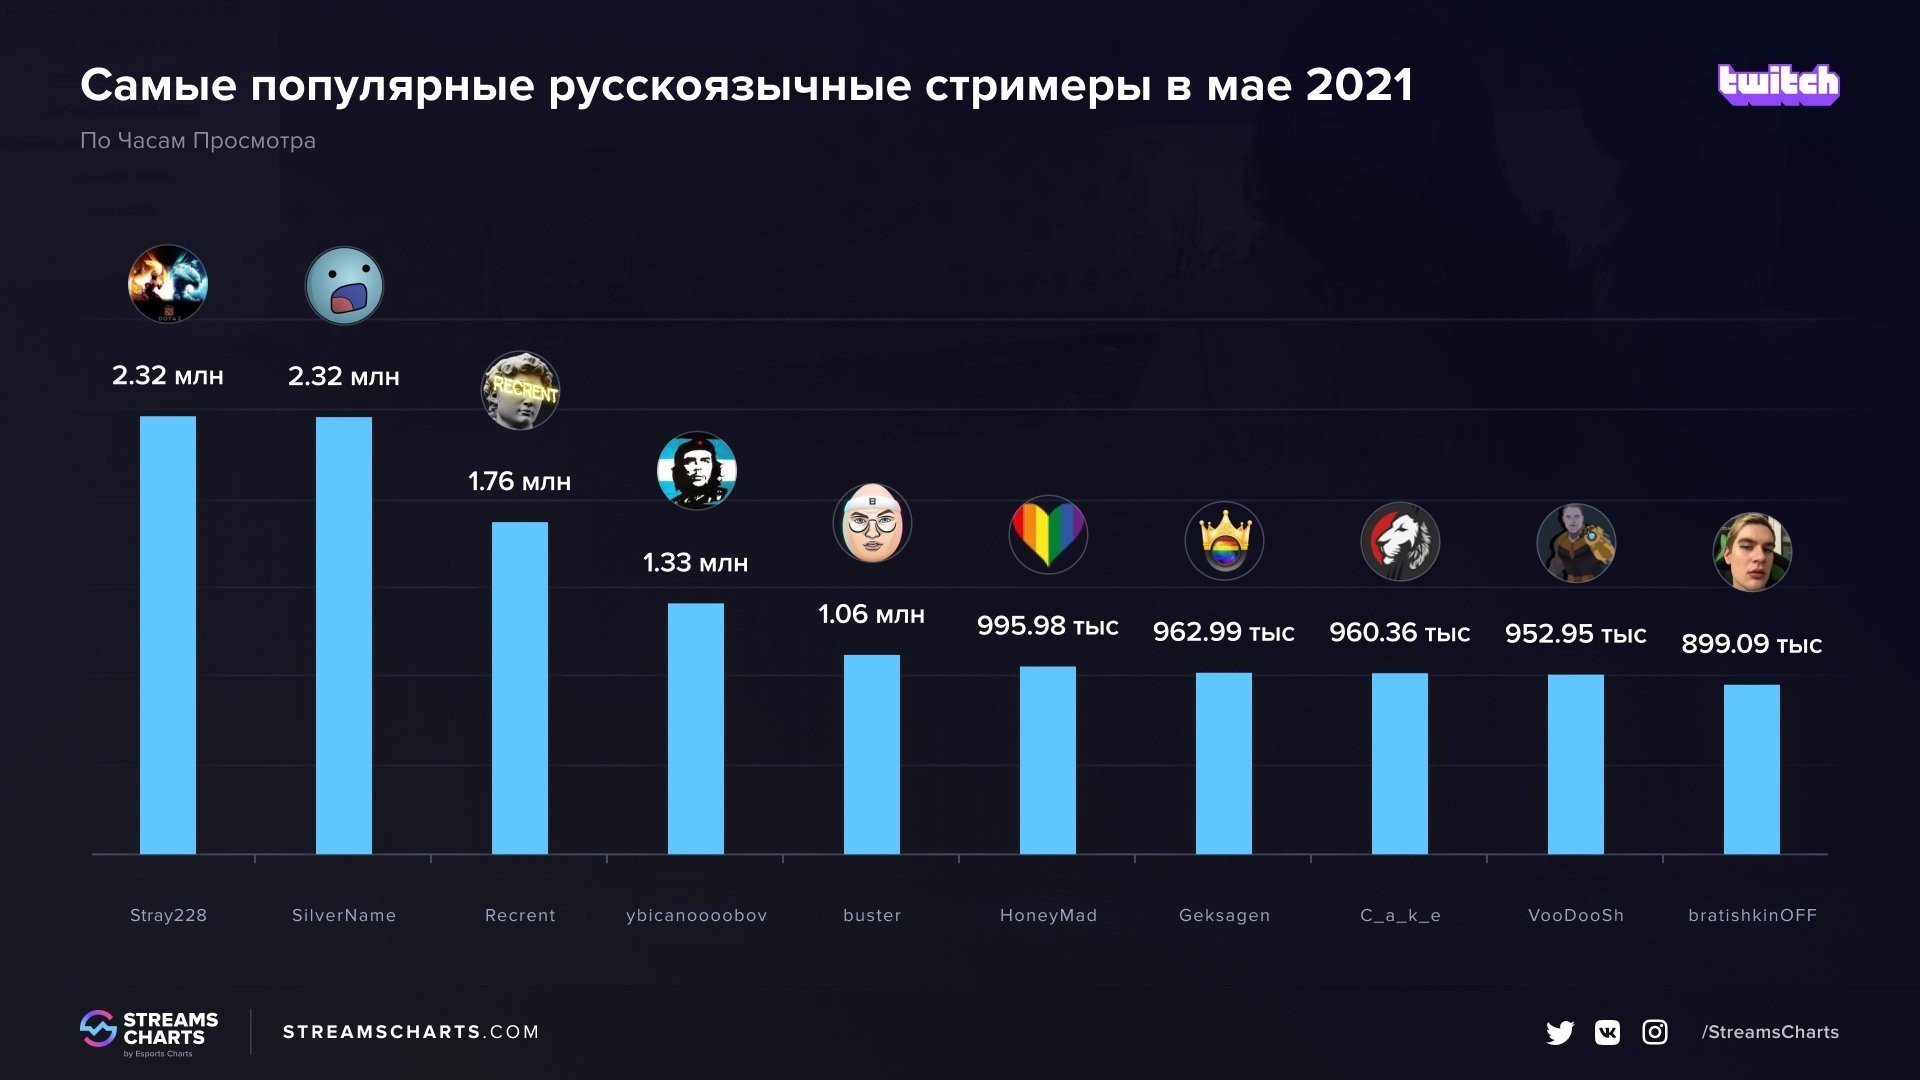 Stray228 стал самым популярным русскоязычным стримером мая на Twitch